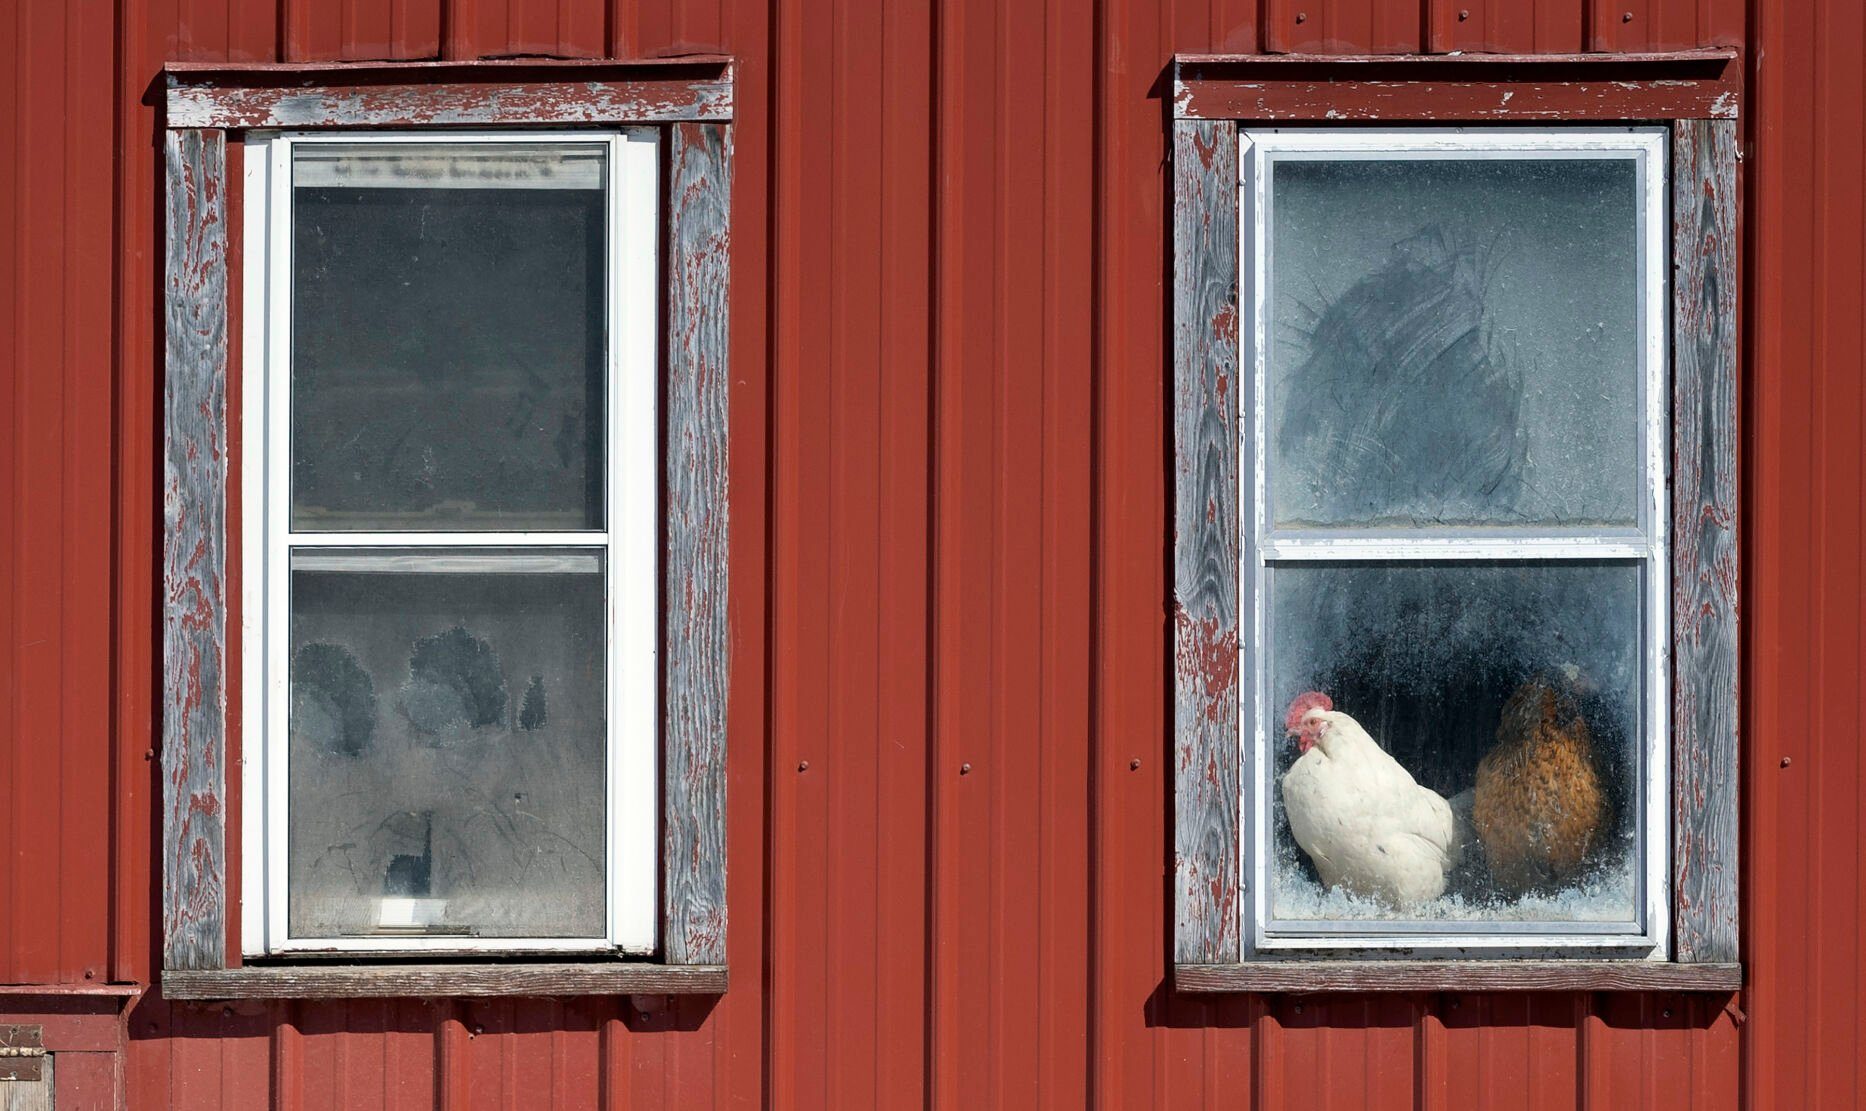 Chickens sit in a barn window at Oak Hollow Farm.    PHOTO CREDIT: Stephen Gassman
Telegraph Herald